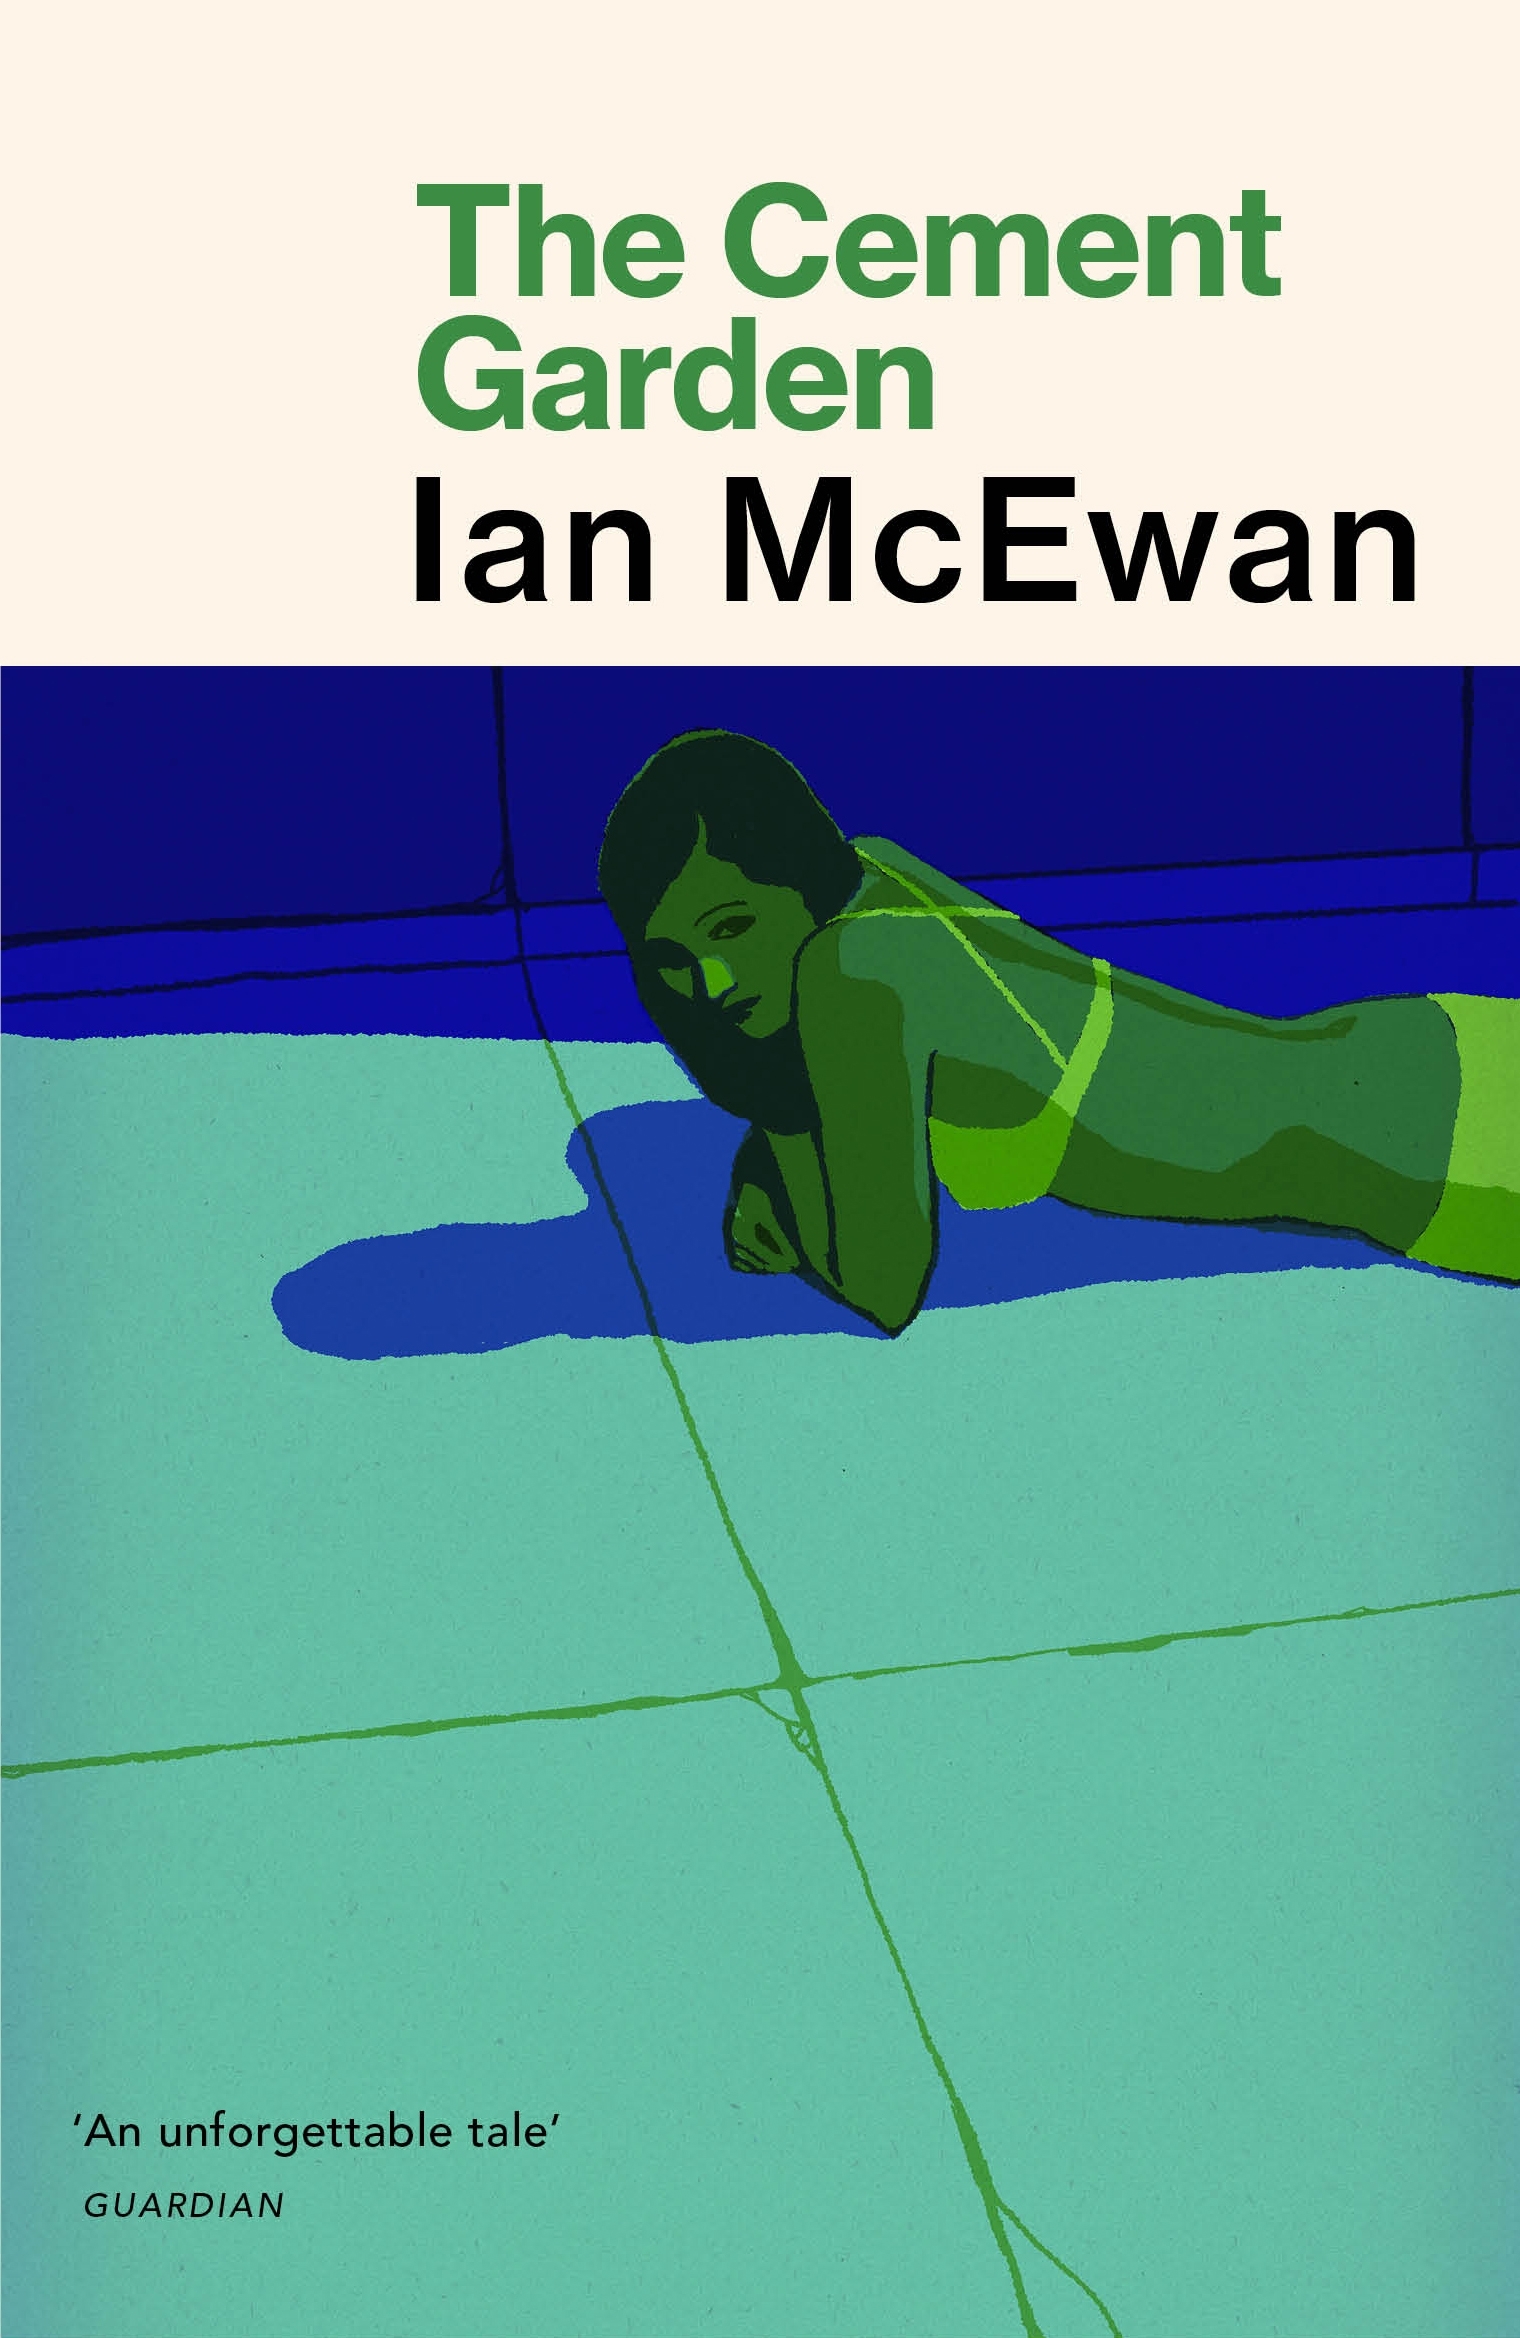 The Cement Garden by Ian McEwan - Penguin Books Australia